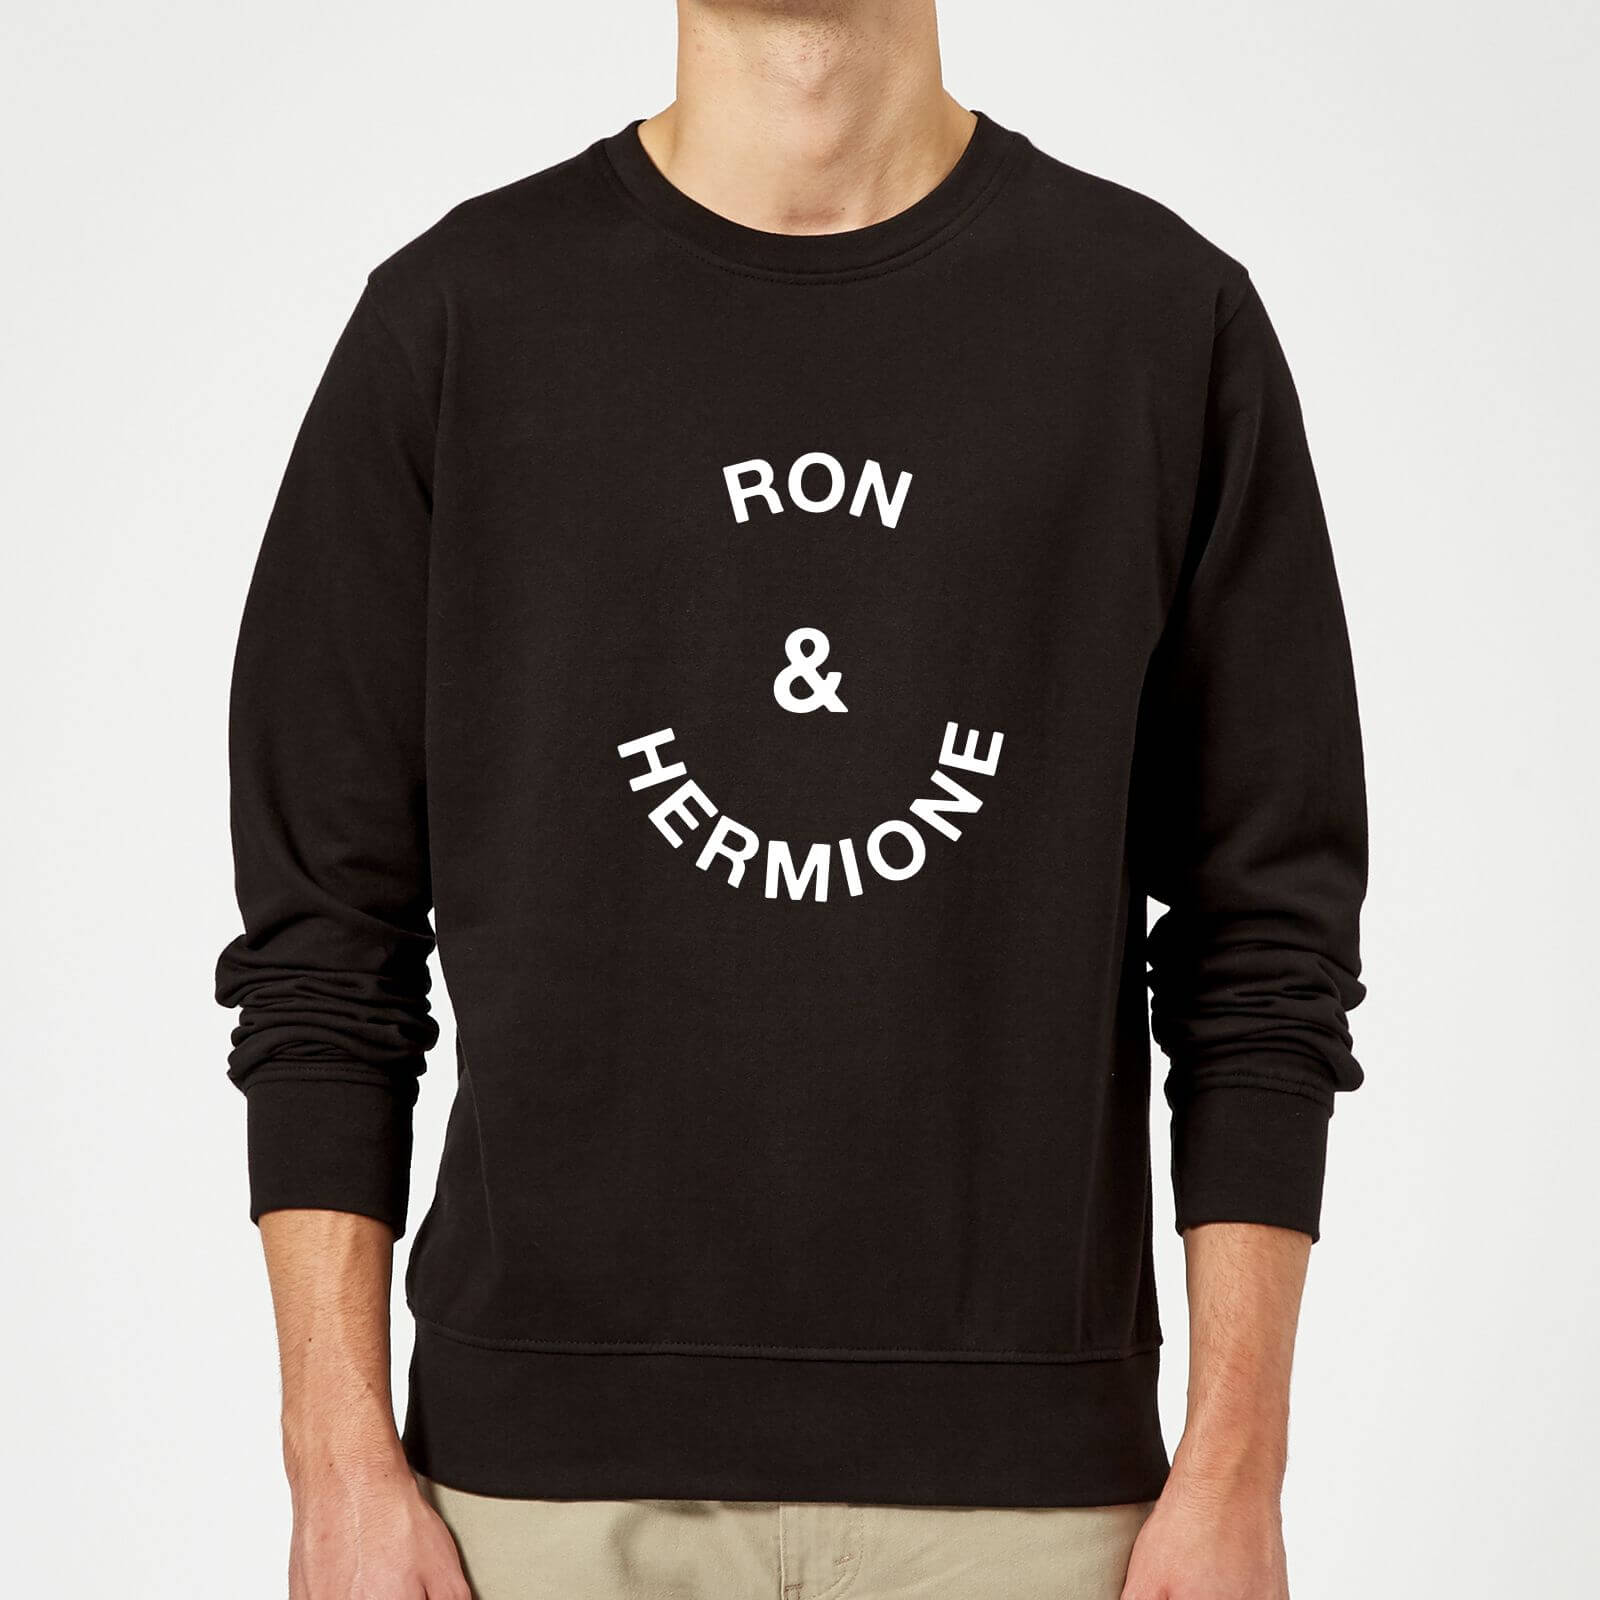 Ron & Hermione Sweatshirt - Black - XL - Black